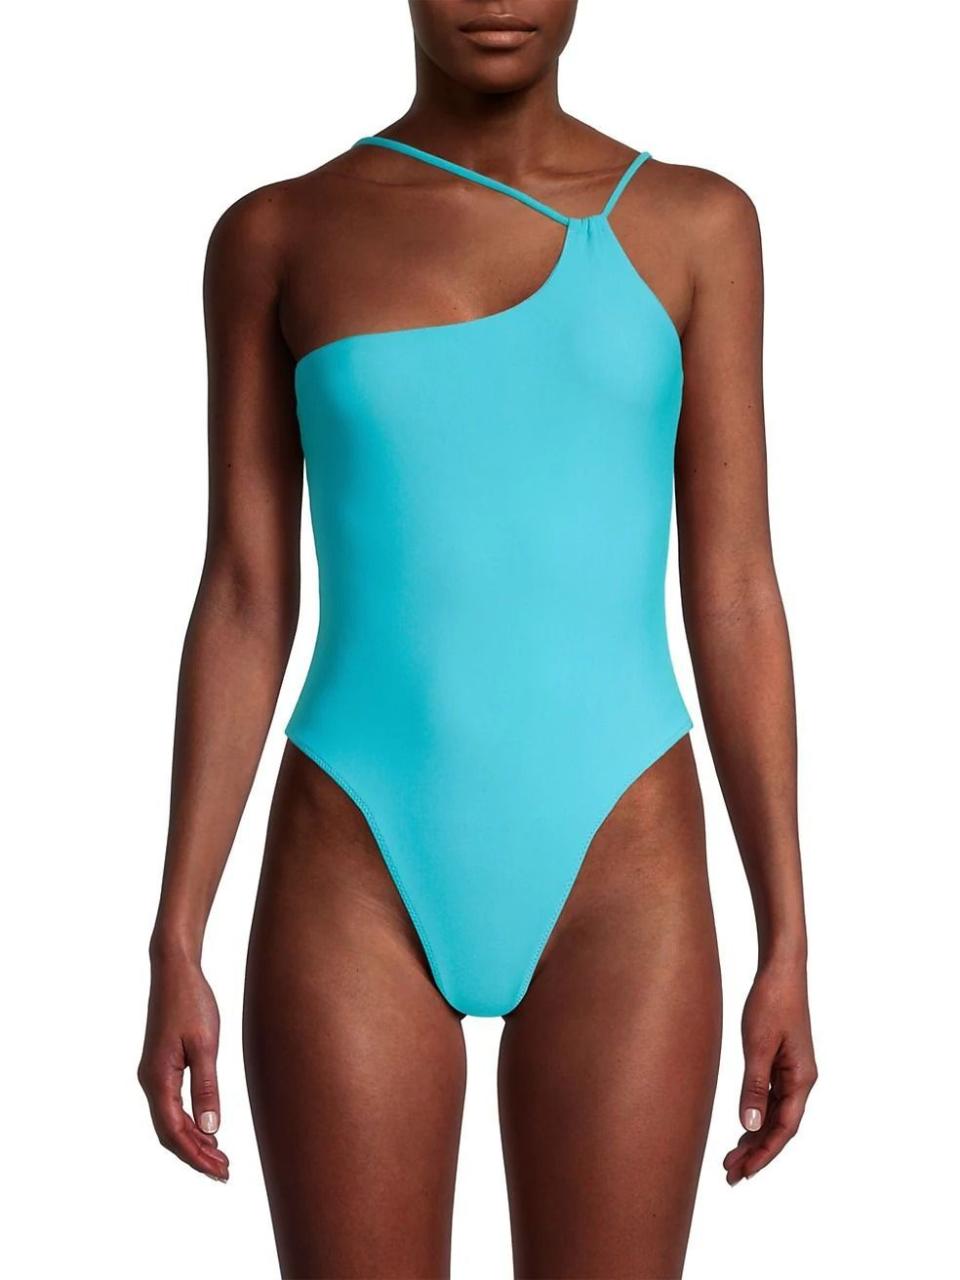 14) Ramy Brook Donna Strappy One-Piece Swimsuit